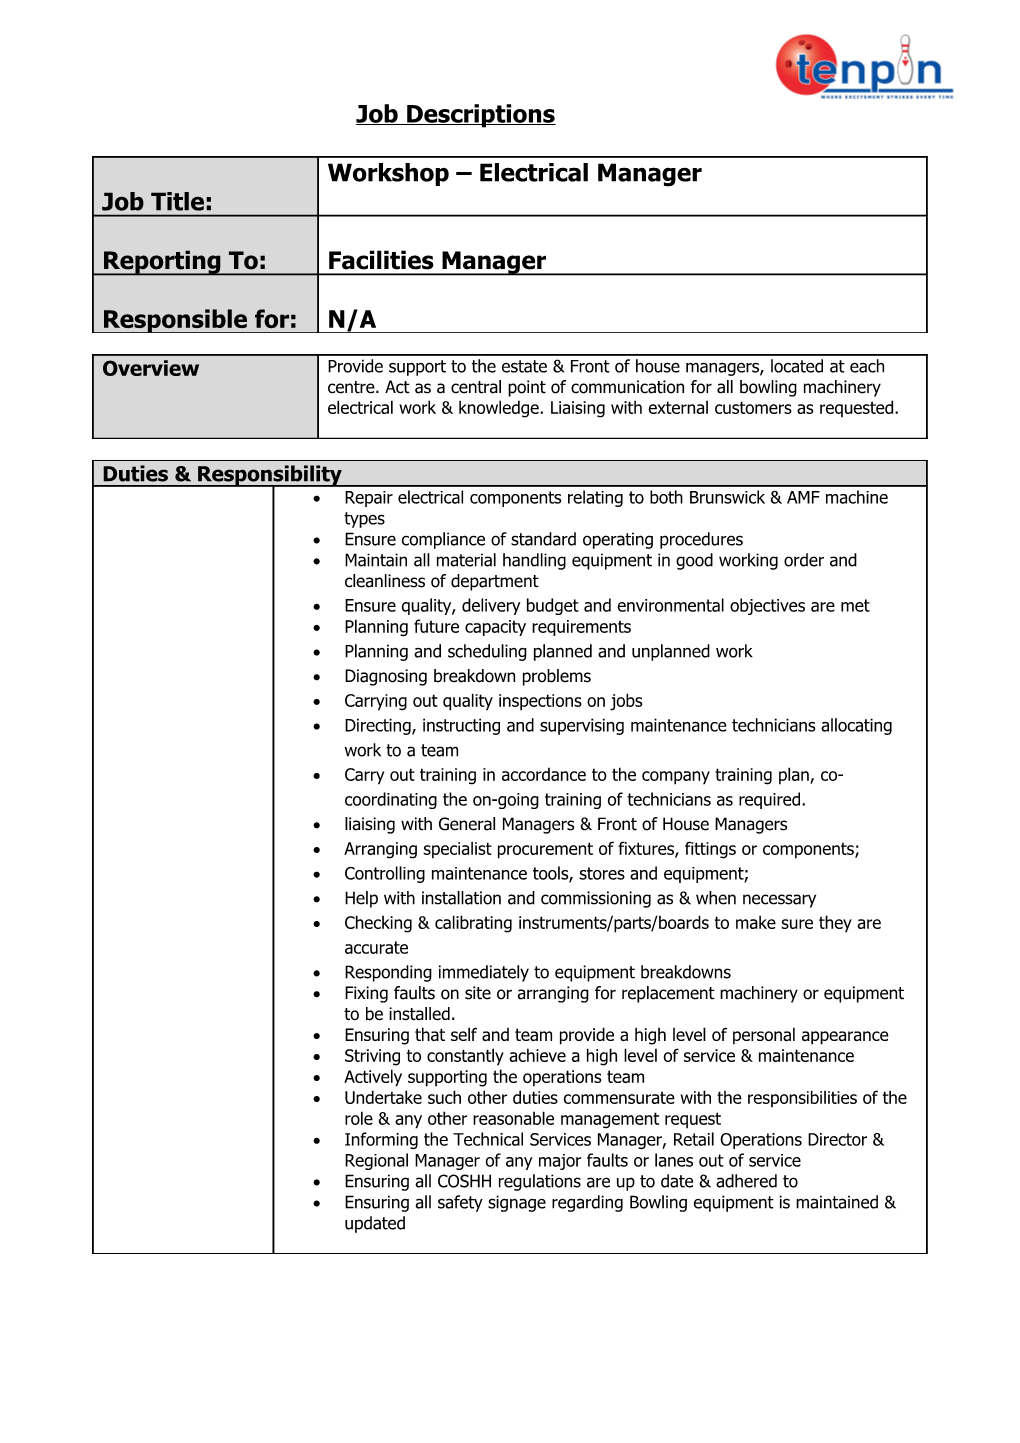 Job Profile / Expectations